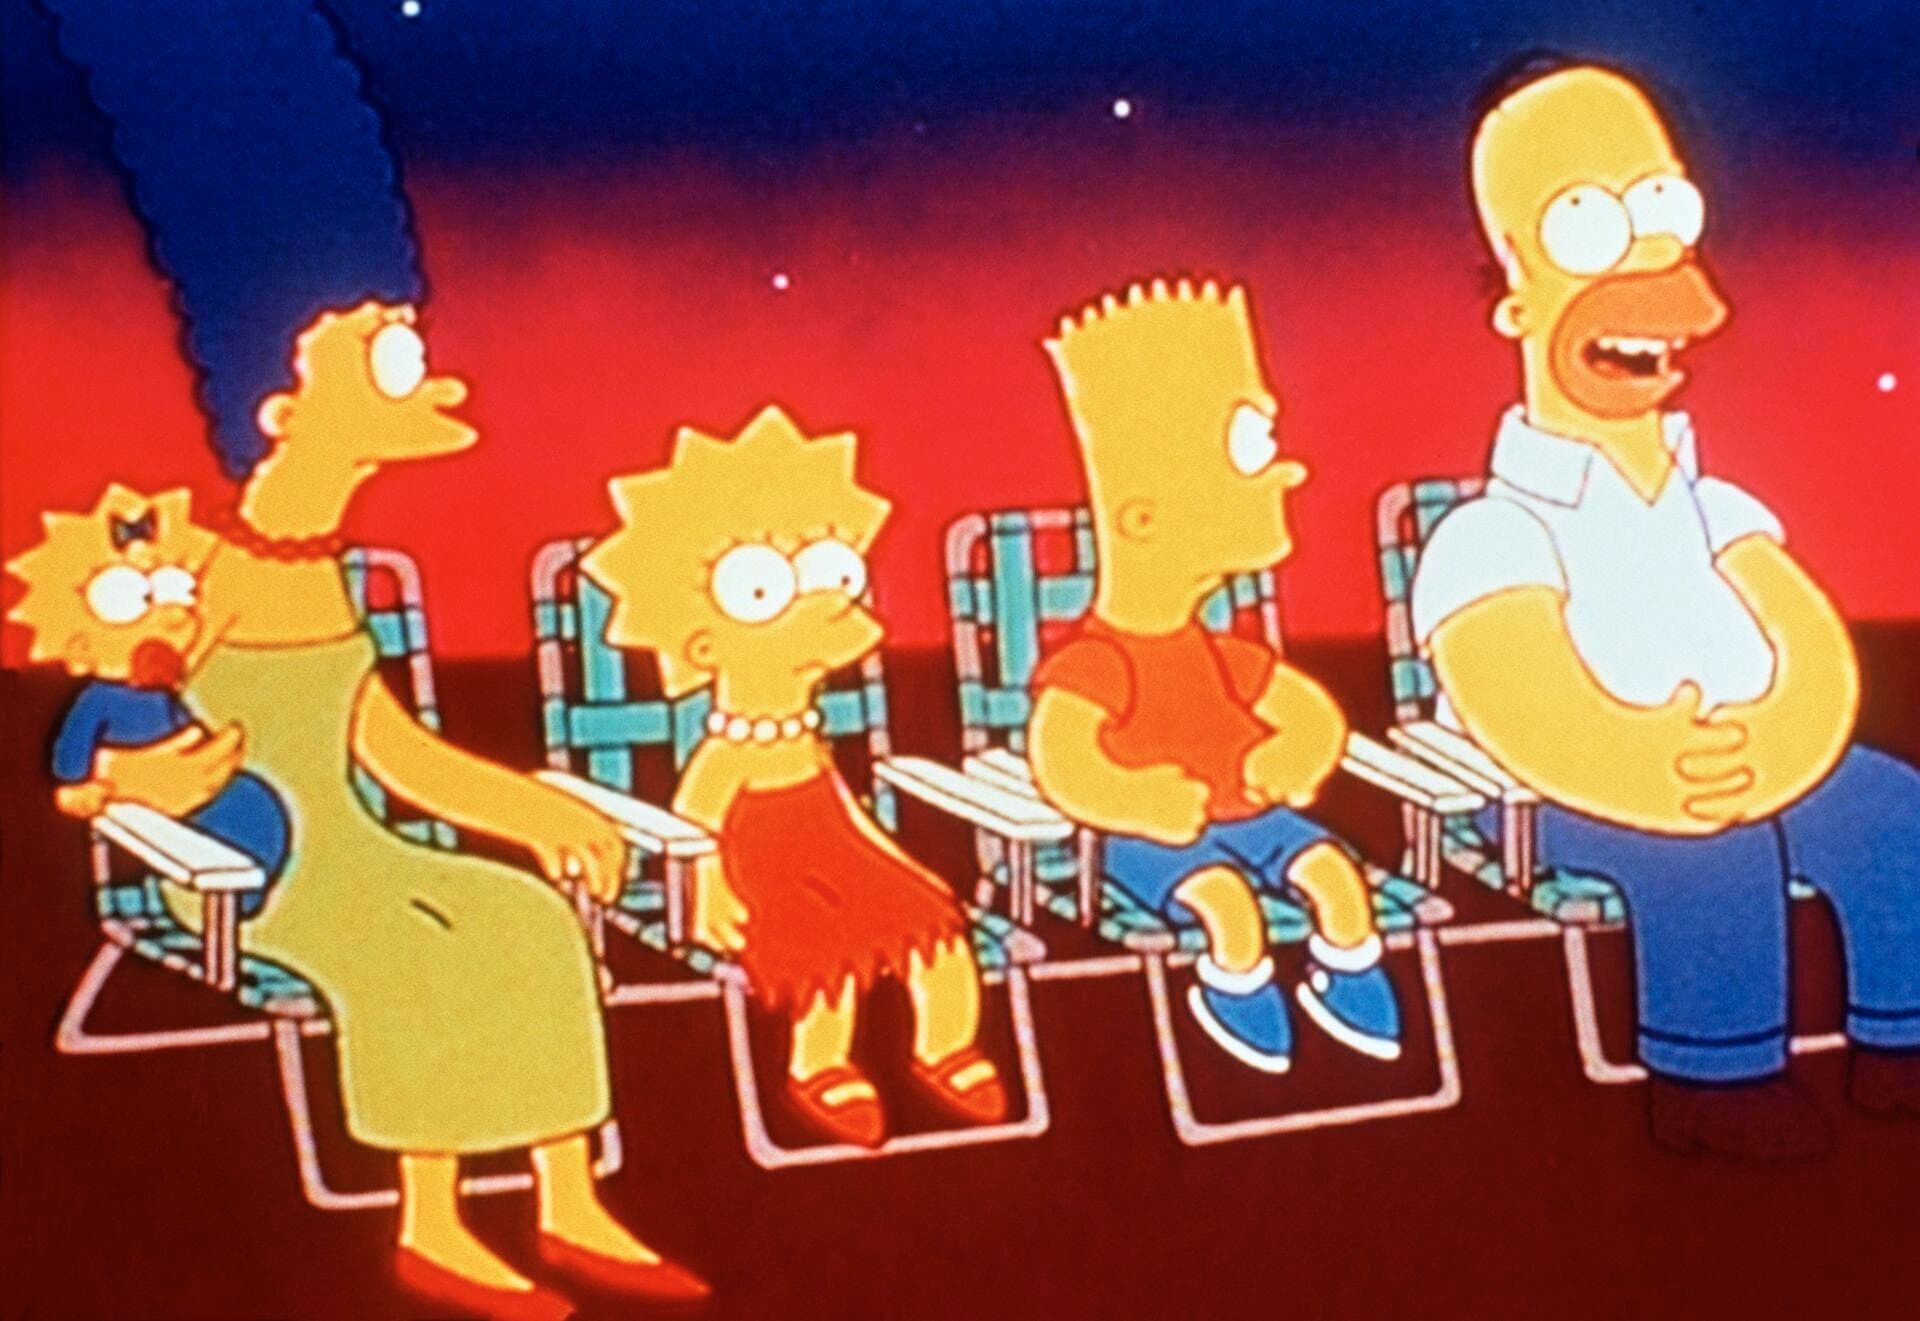 The Simpsons - Bart's Comet